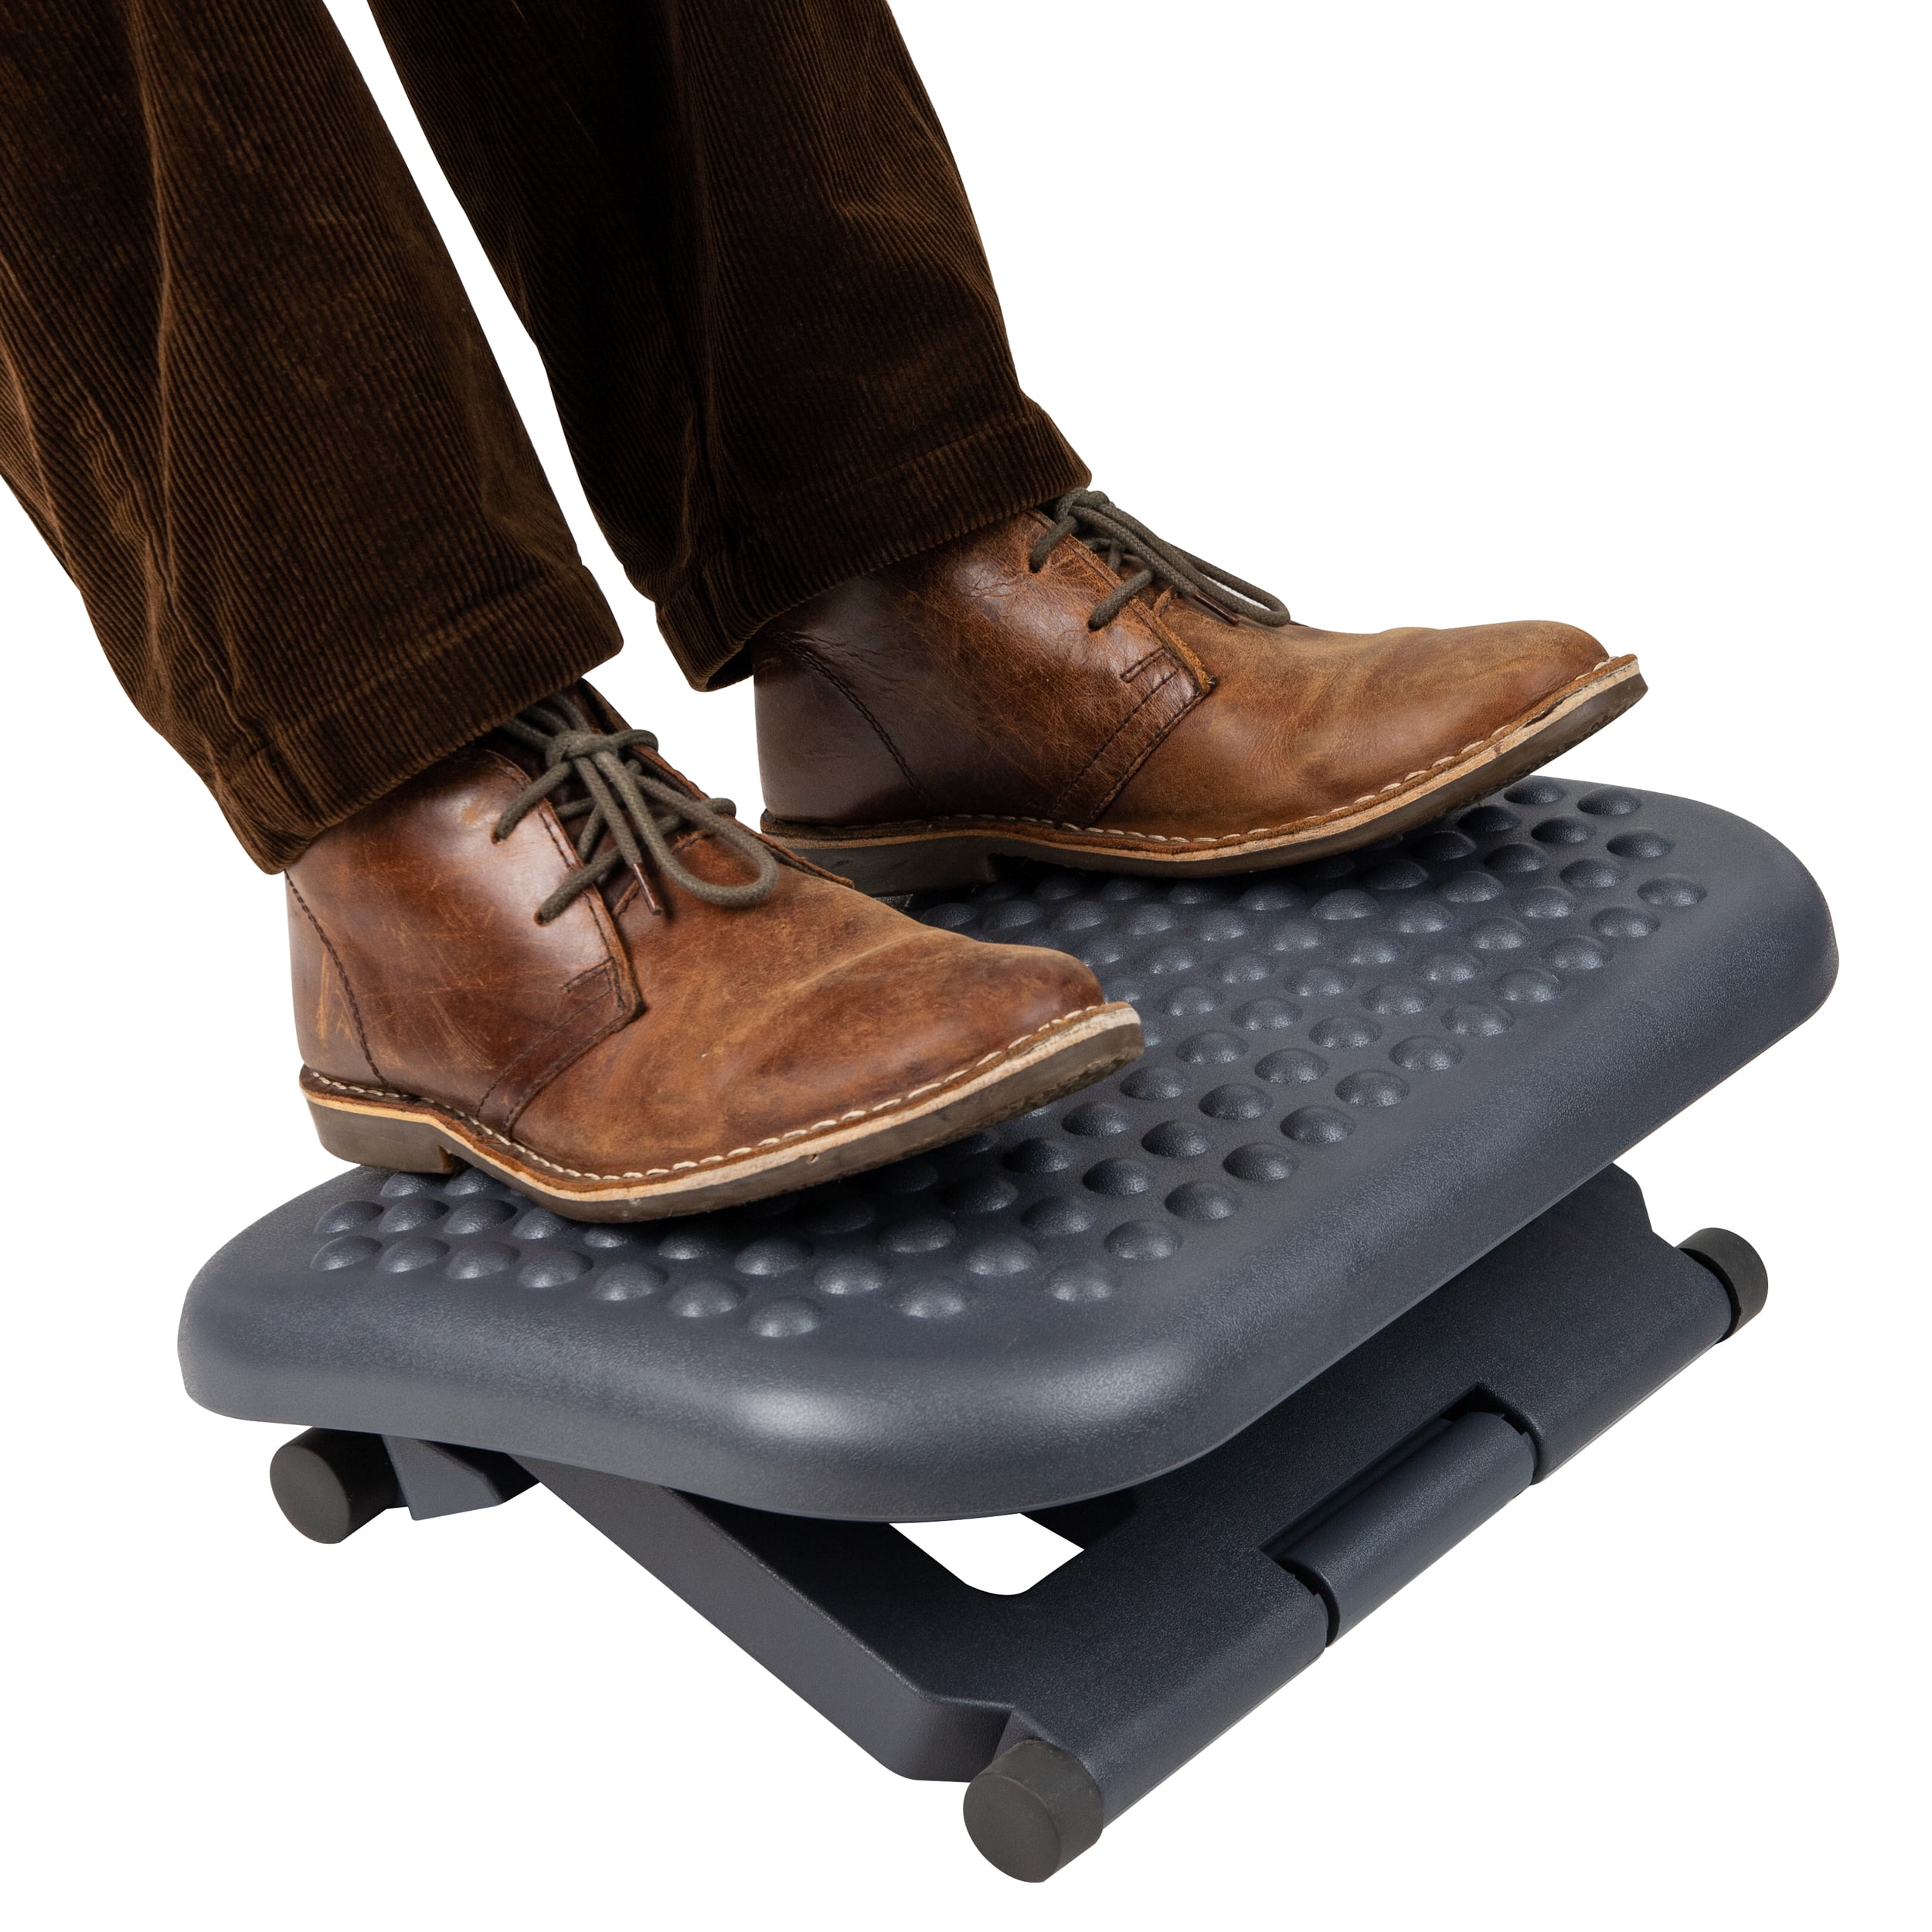 SEBIDER Height Adjustable Footrest with Massage Surface Under Desk,  Ergonomic Comfort Home & Office Foot Stool, Black